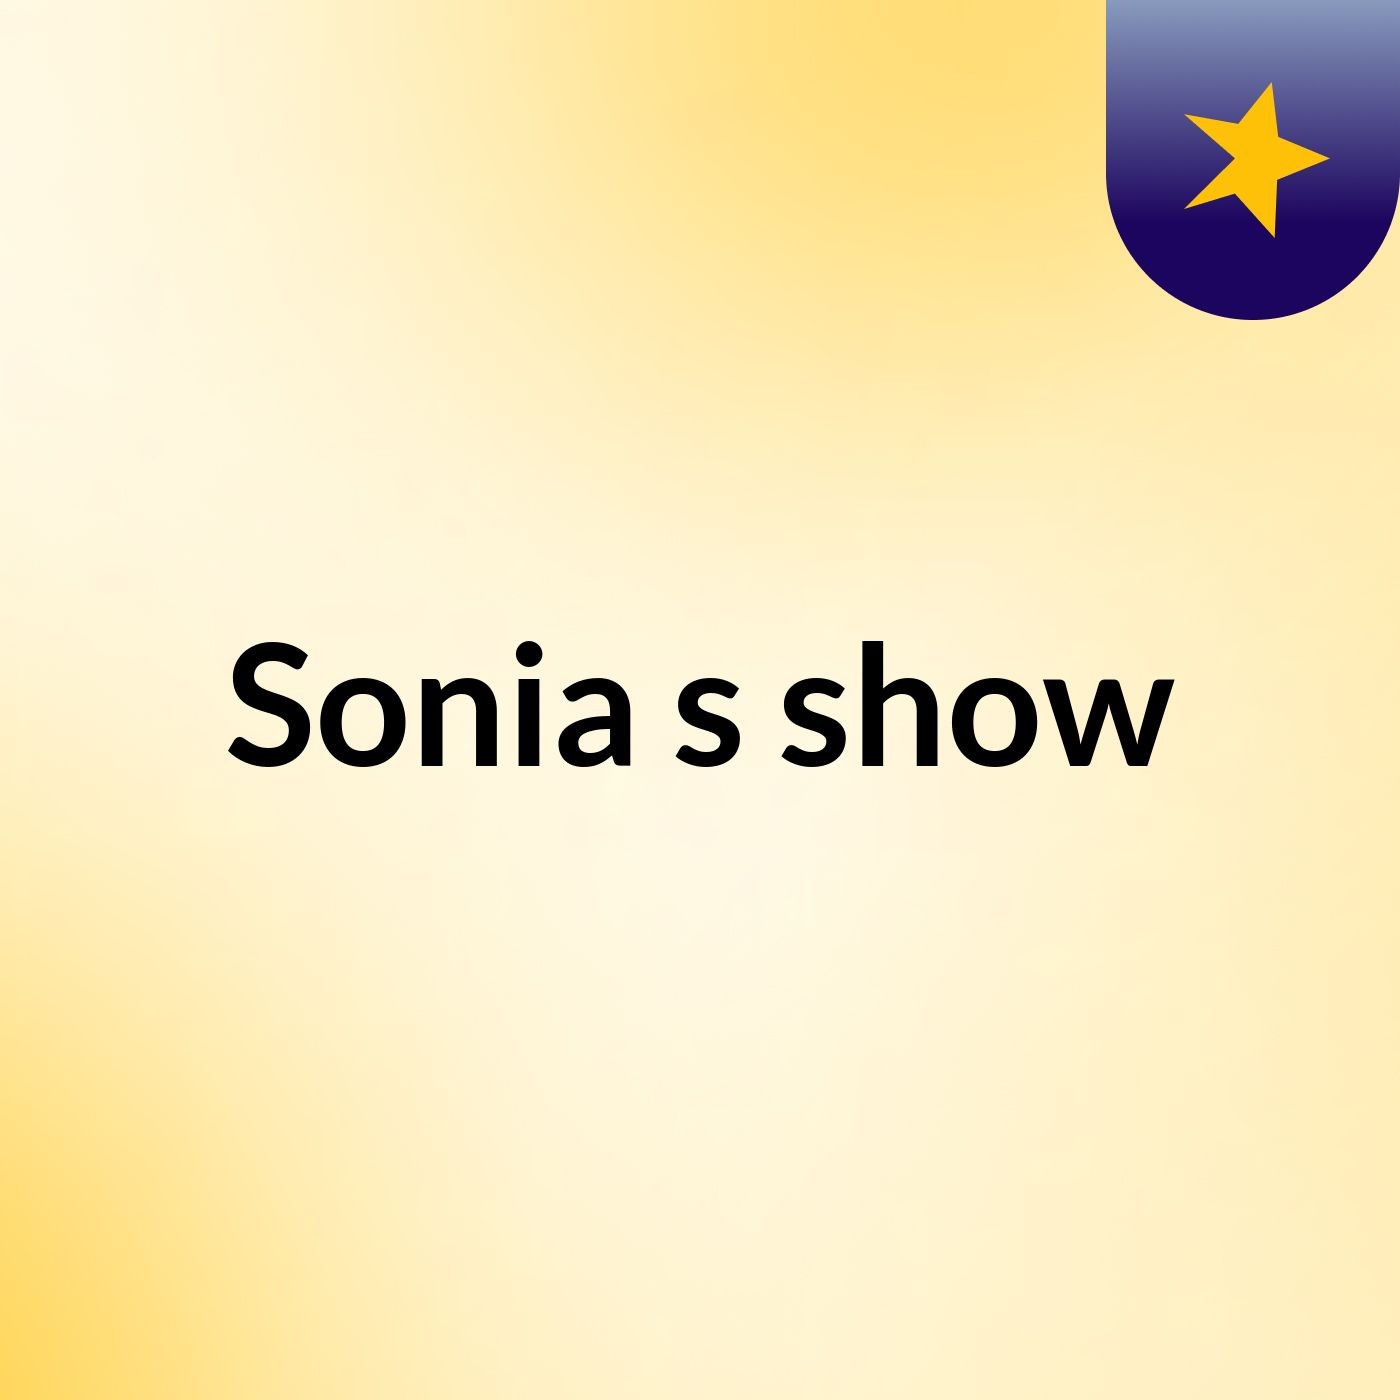 Sonia's show